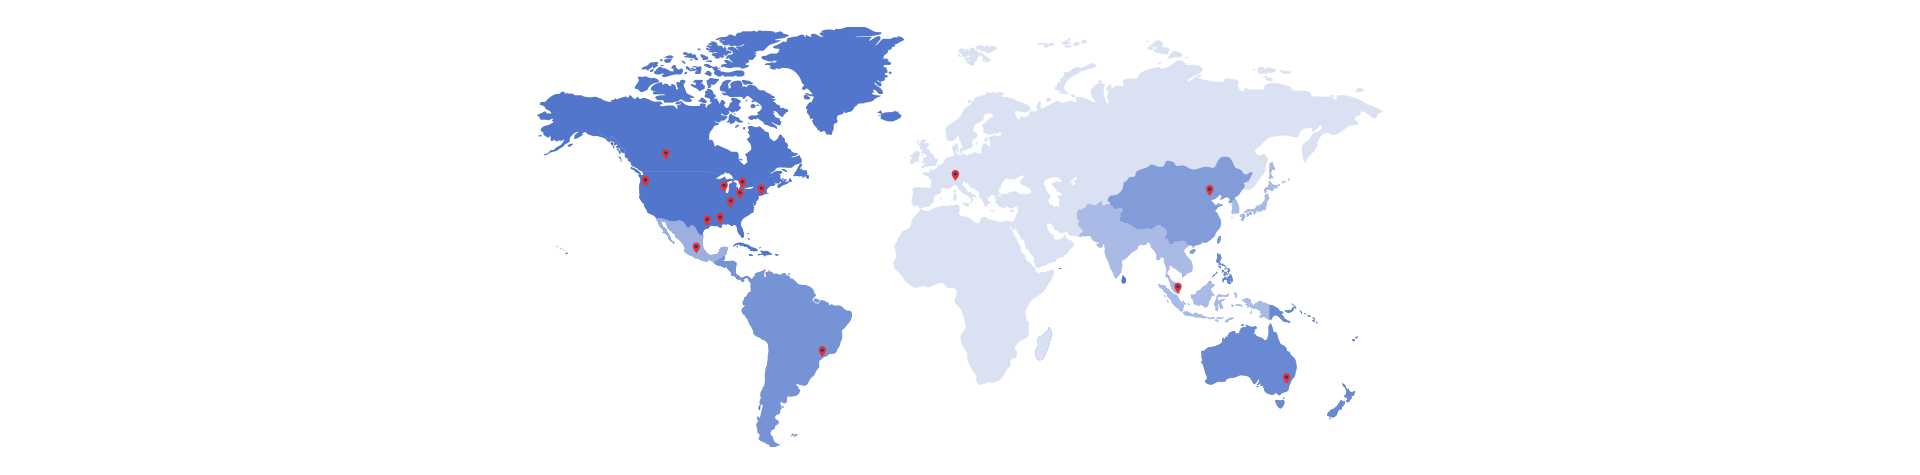 Locations around the globe.